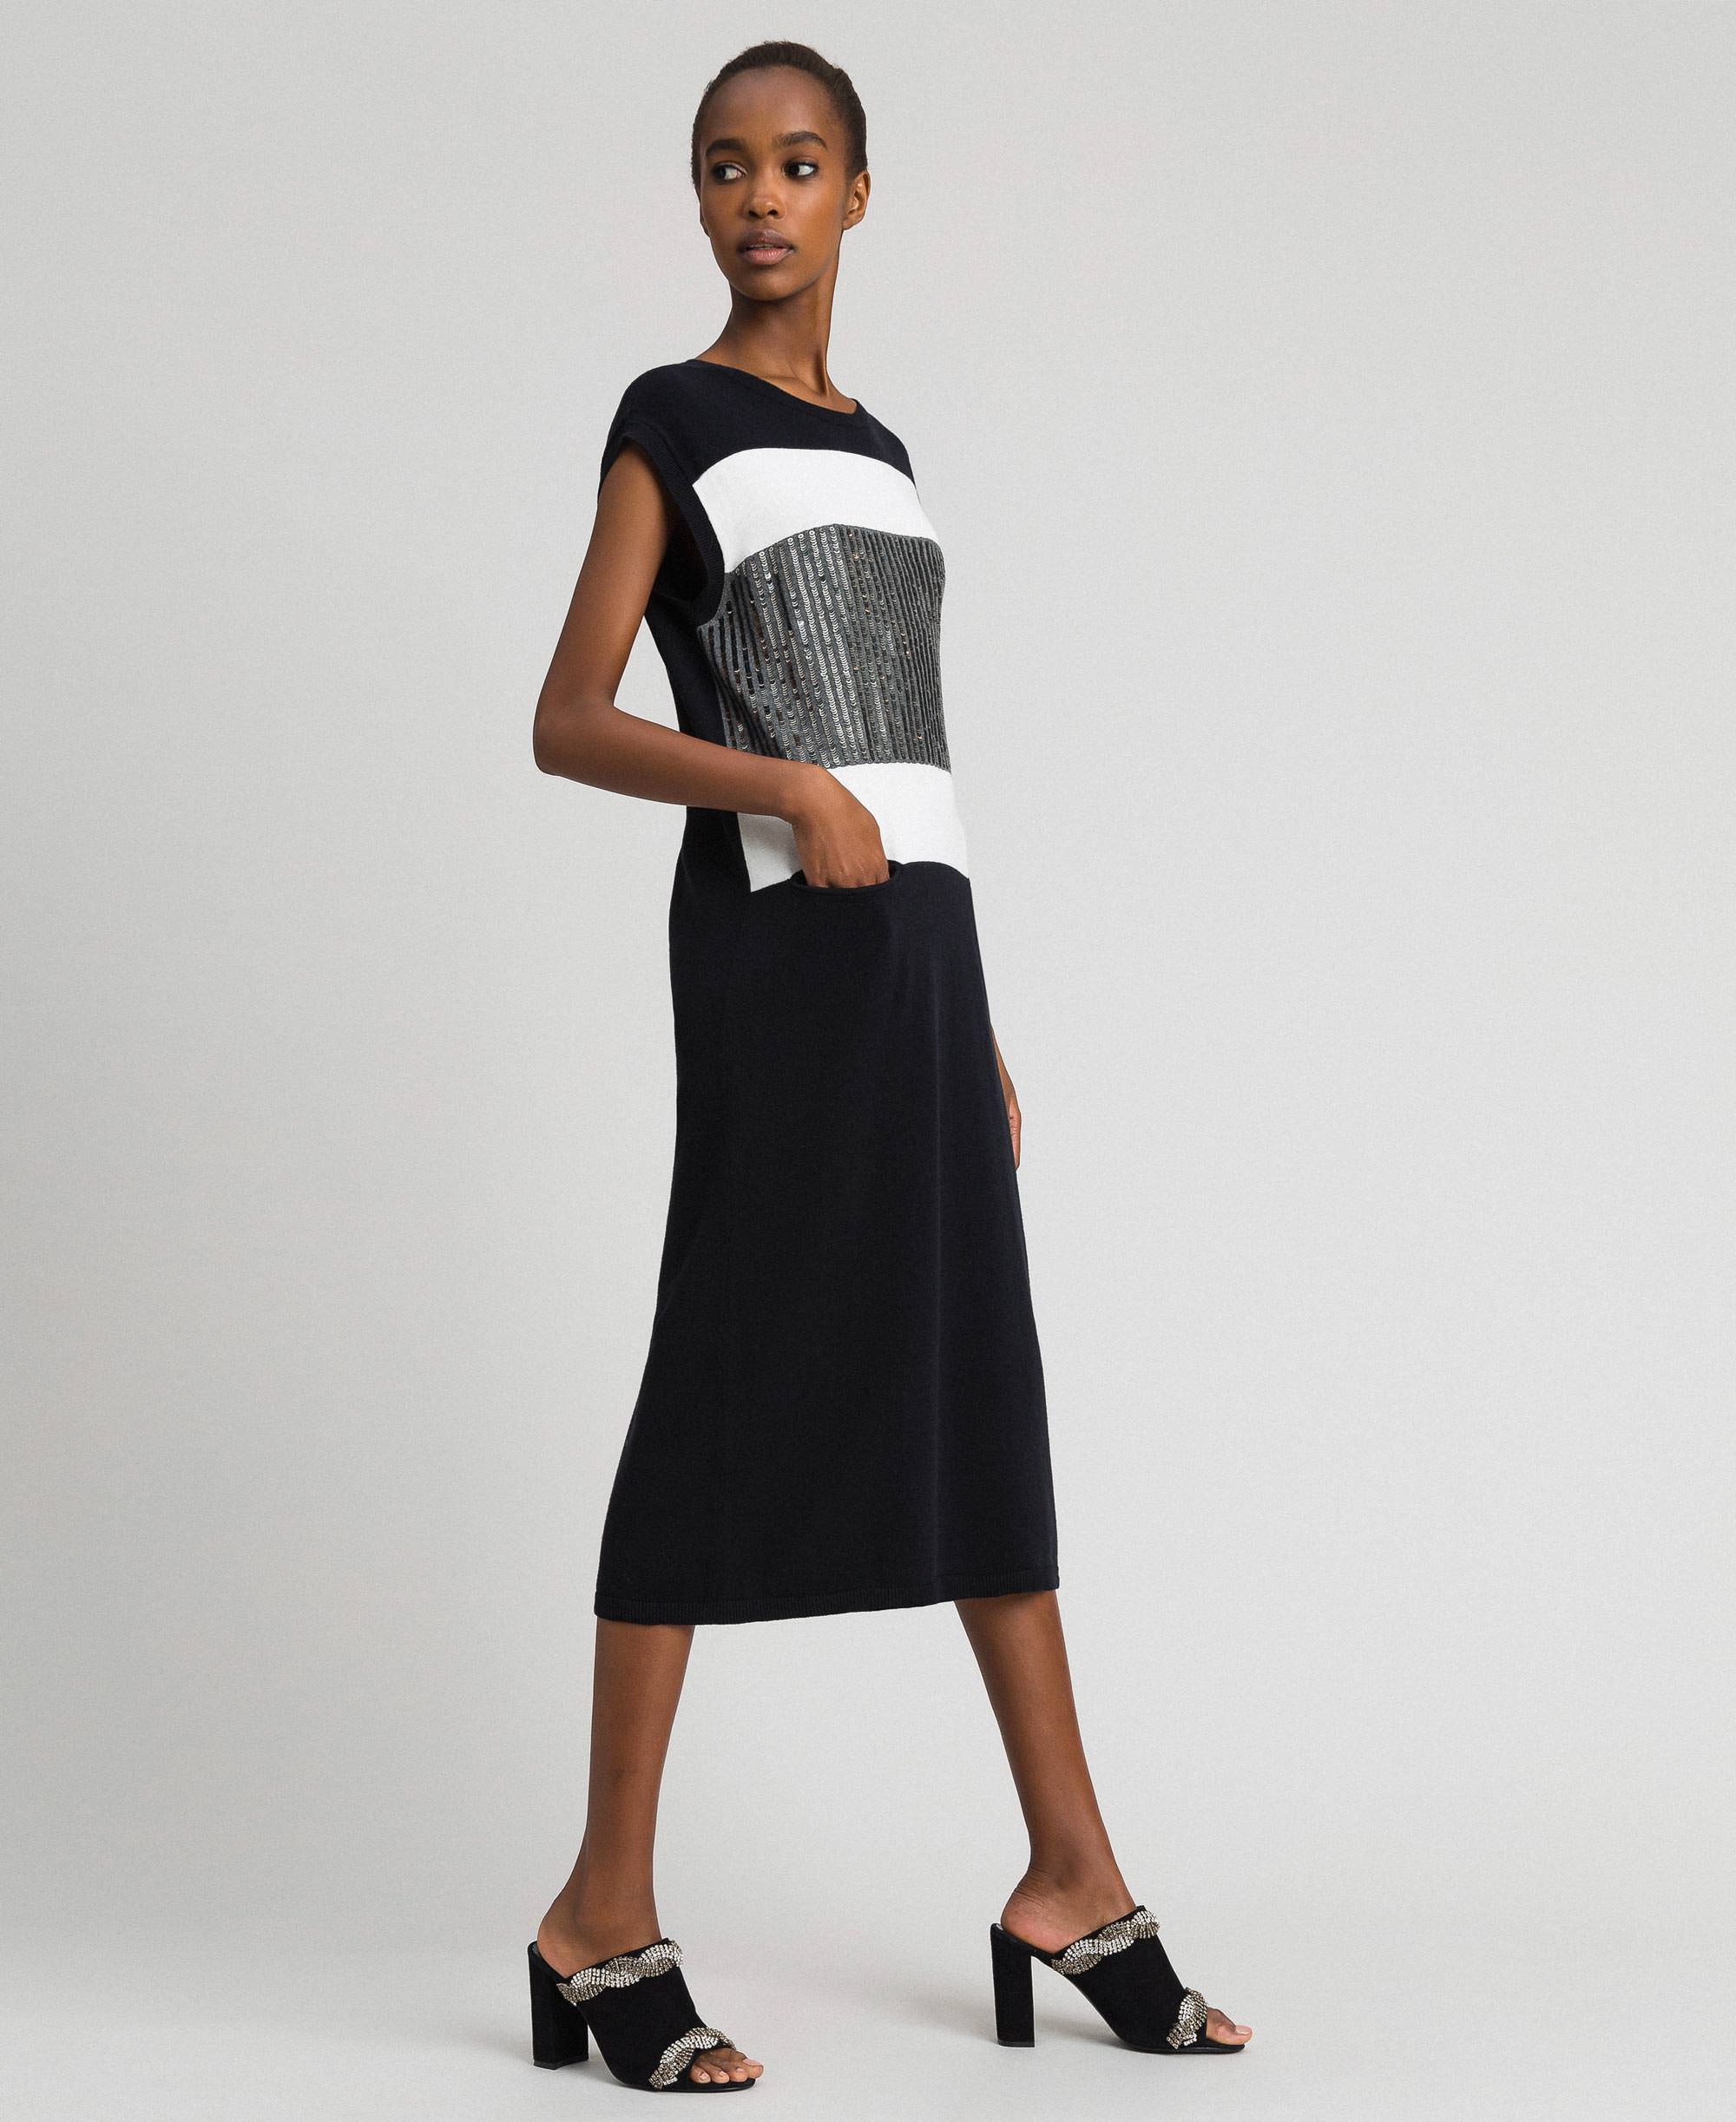 Color Block Kleid Mit Aufgestickten Pailletten Frau Gemustert Twinset Milano